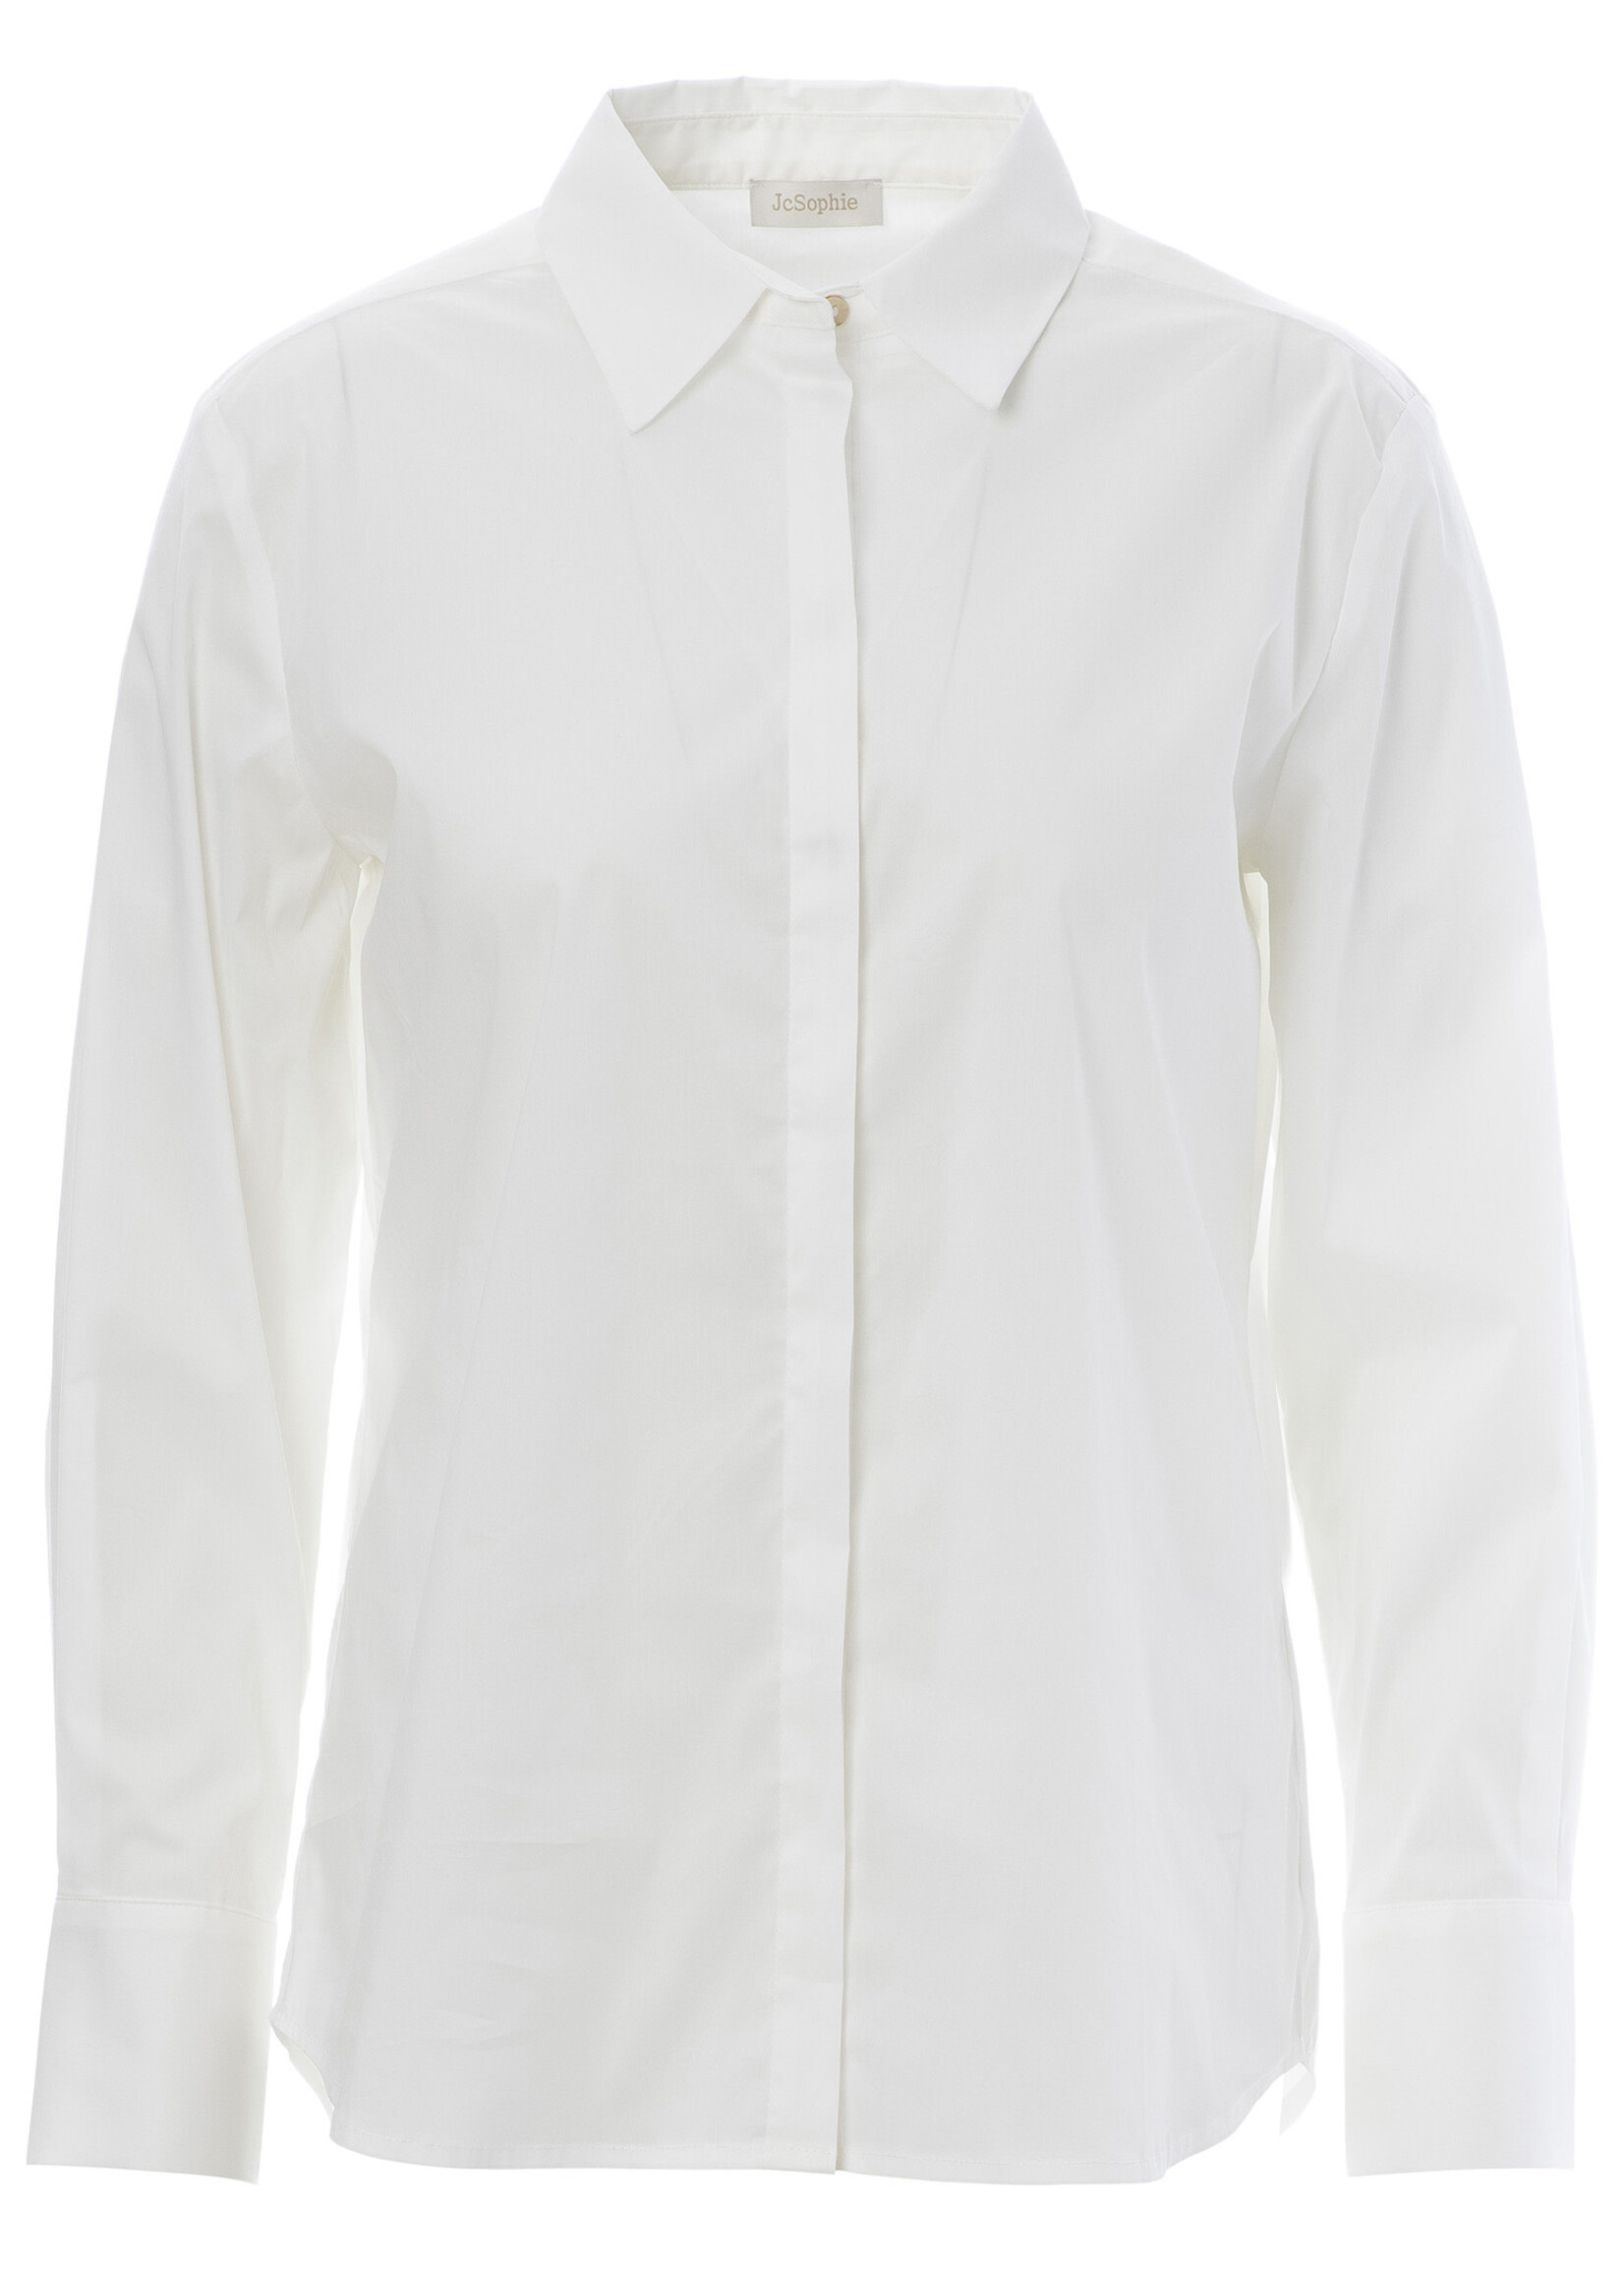 JC Sophie JC Sophie, Ashley blouse, Off White, Size: